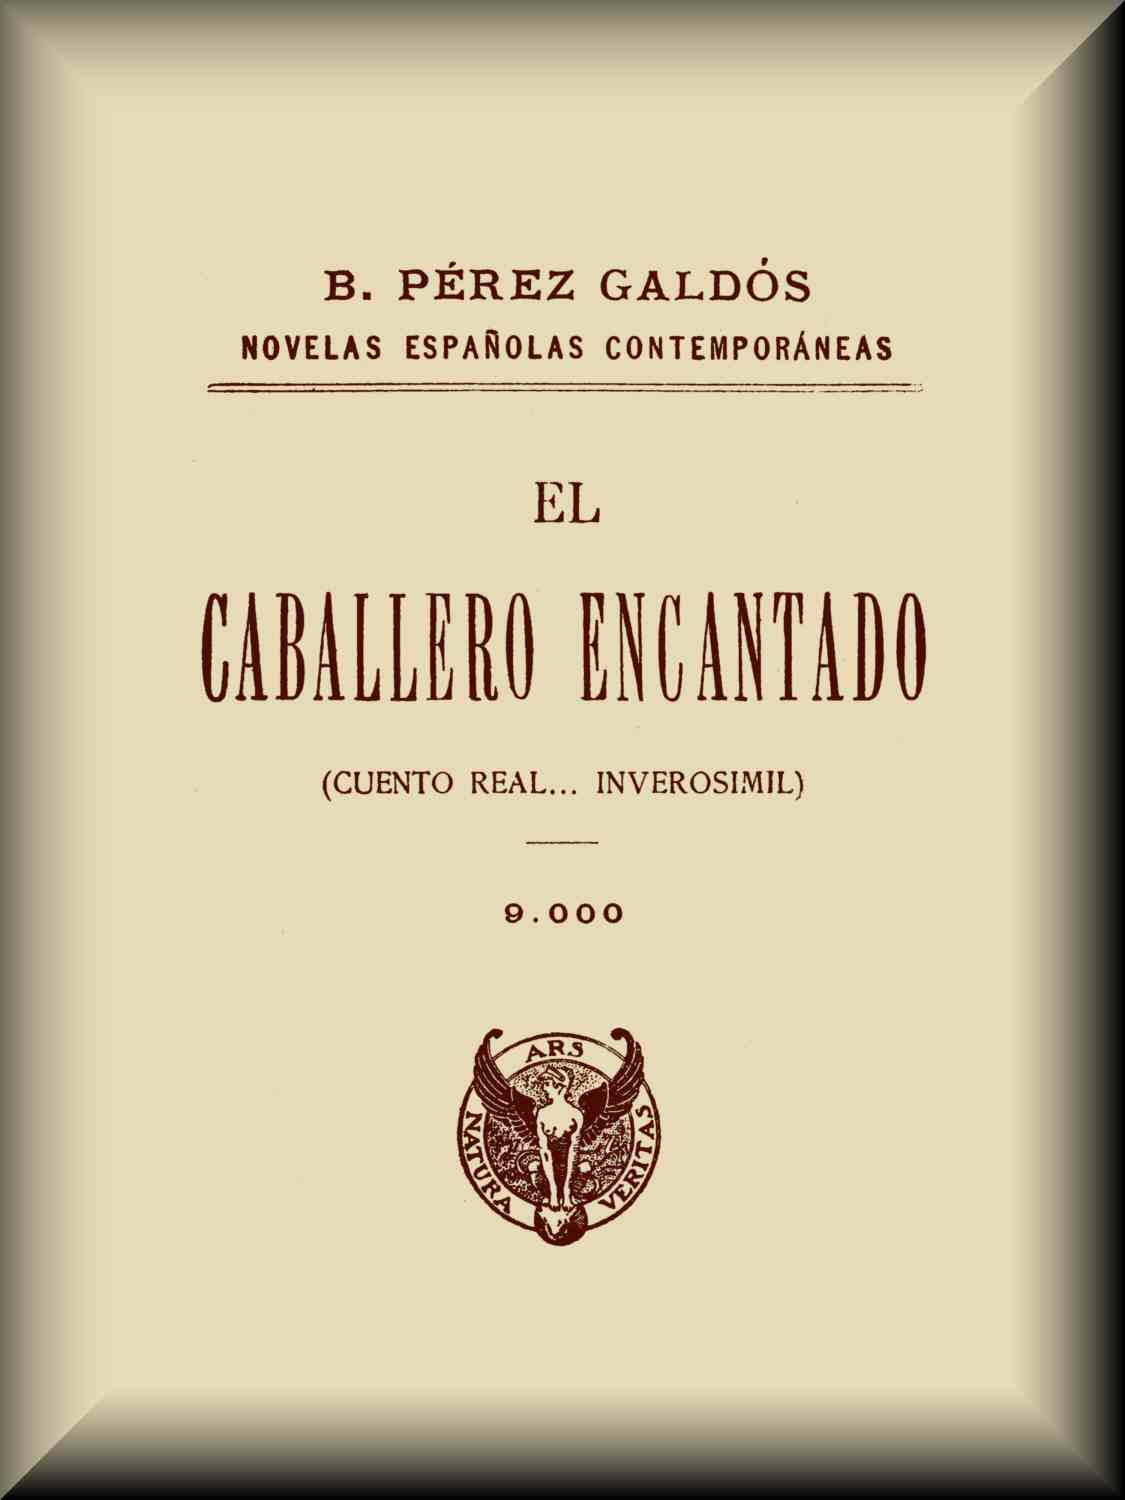 El caballero encantado, by Benito Pérez Galdós—A Project Gutenberg eBook